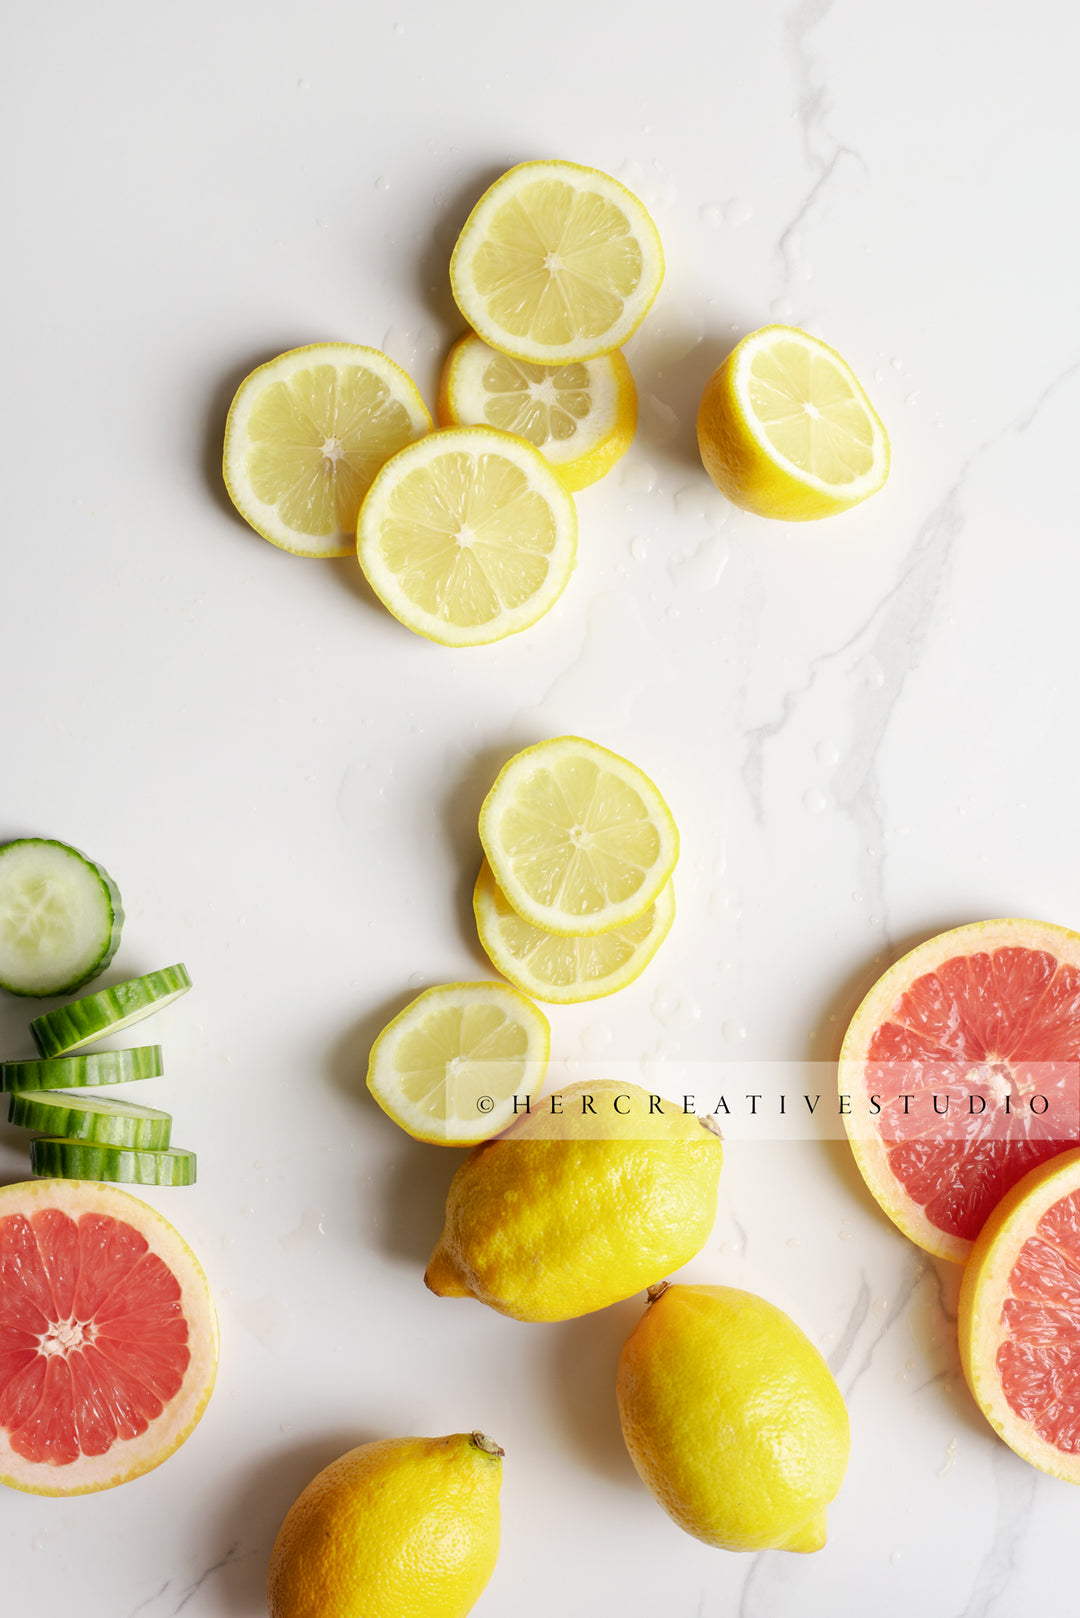 Lime, Lemon & Grapefruit Slices. Stock Image.